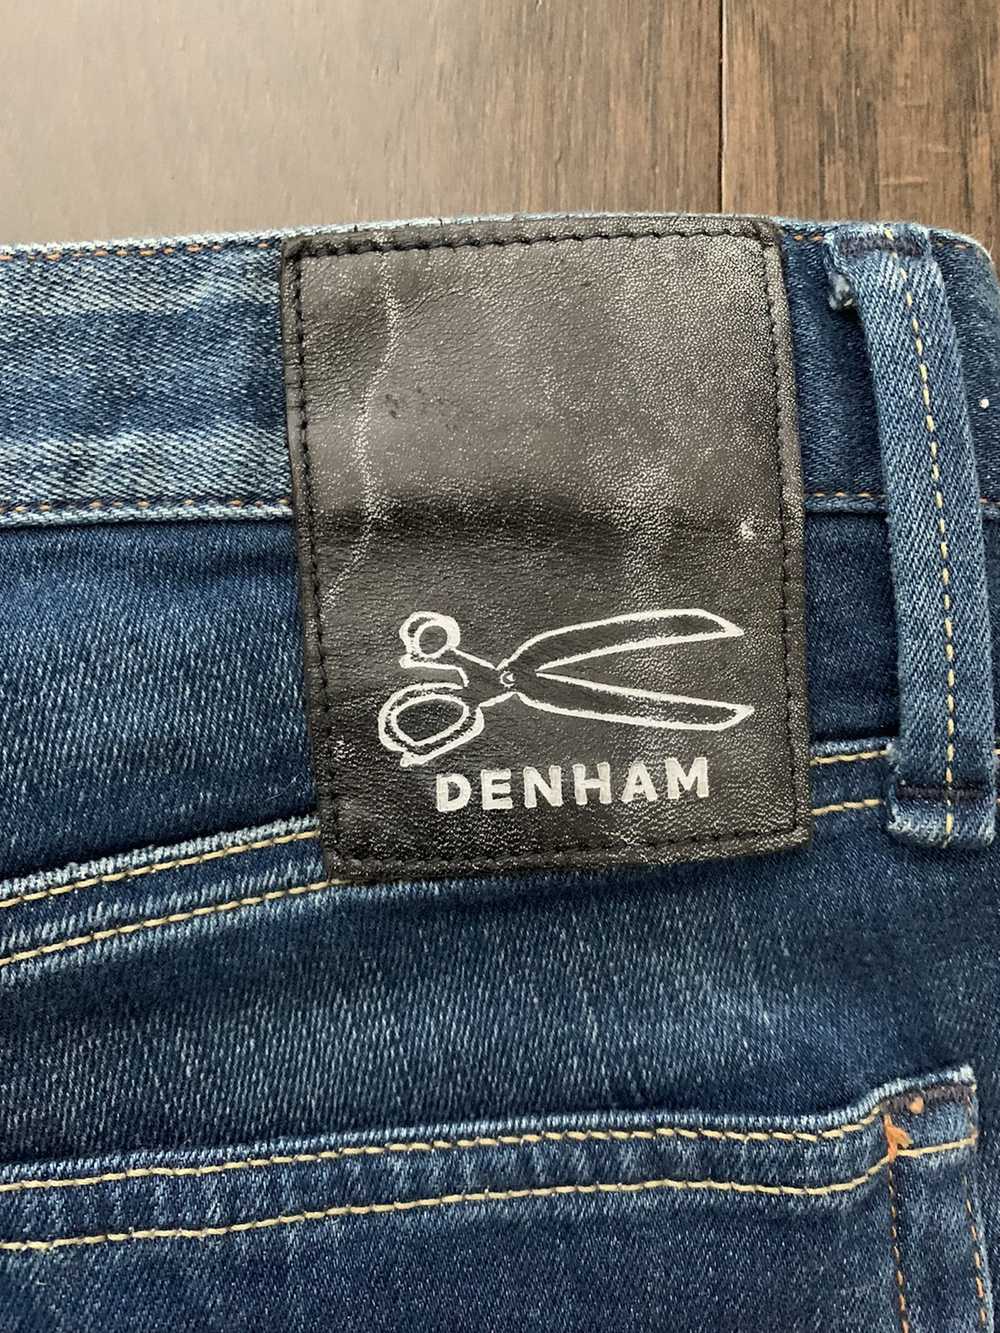 Denham Denham Razor Slim Fit Jeans - image 4